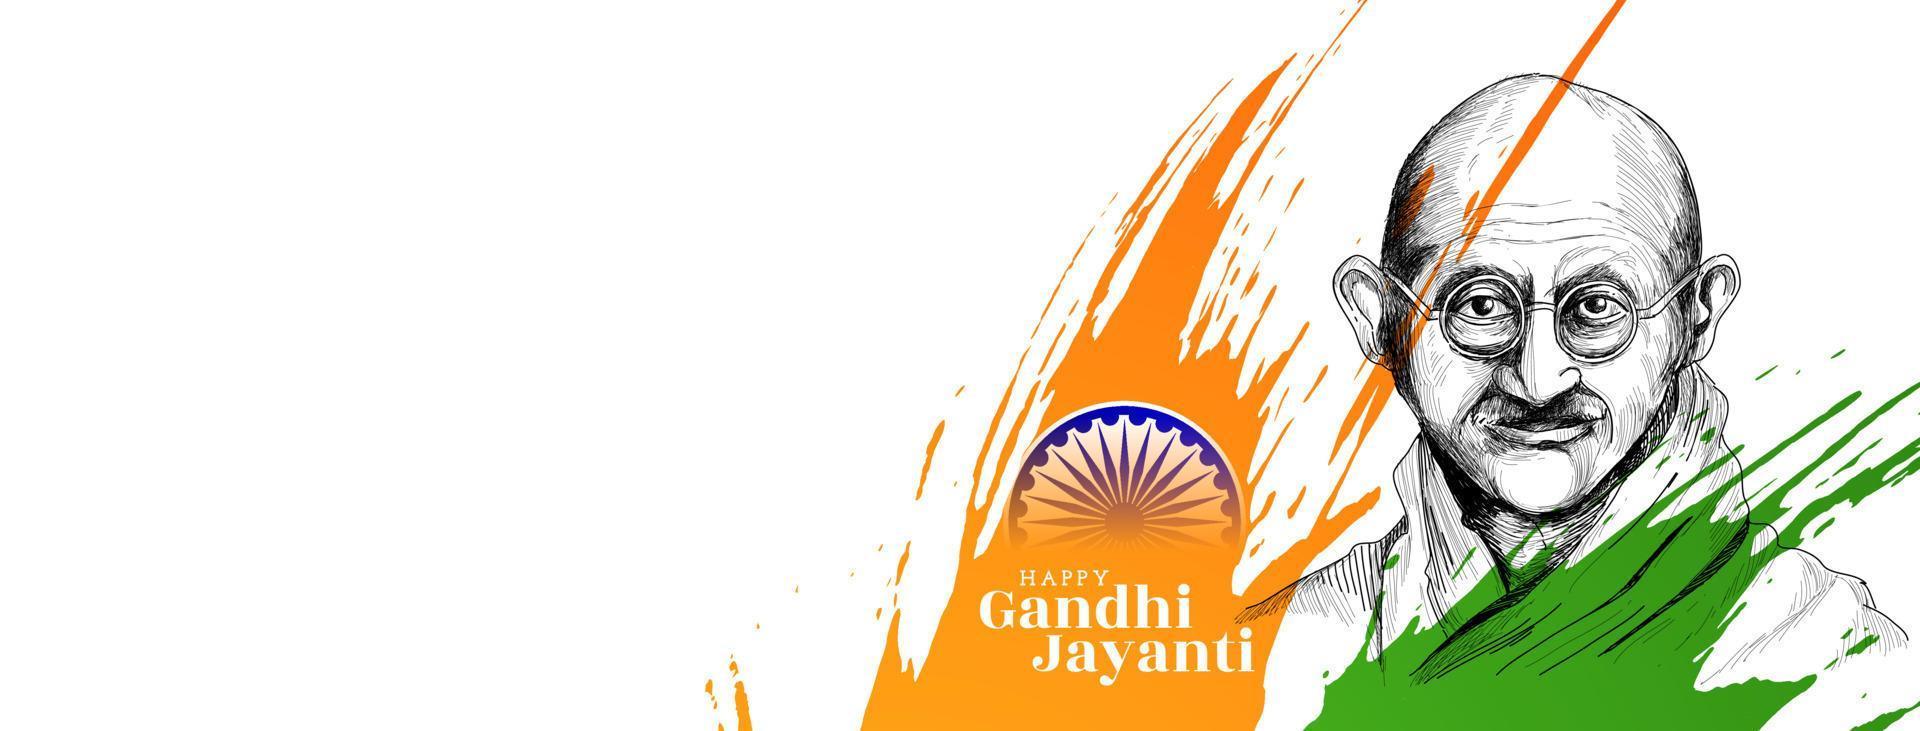 Happy Gandhi Jayanti 2. Oktober Feier Banner Design vektor